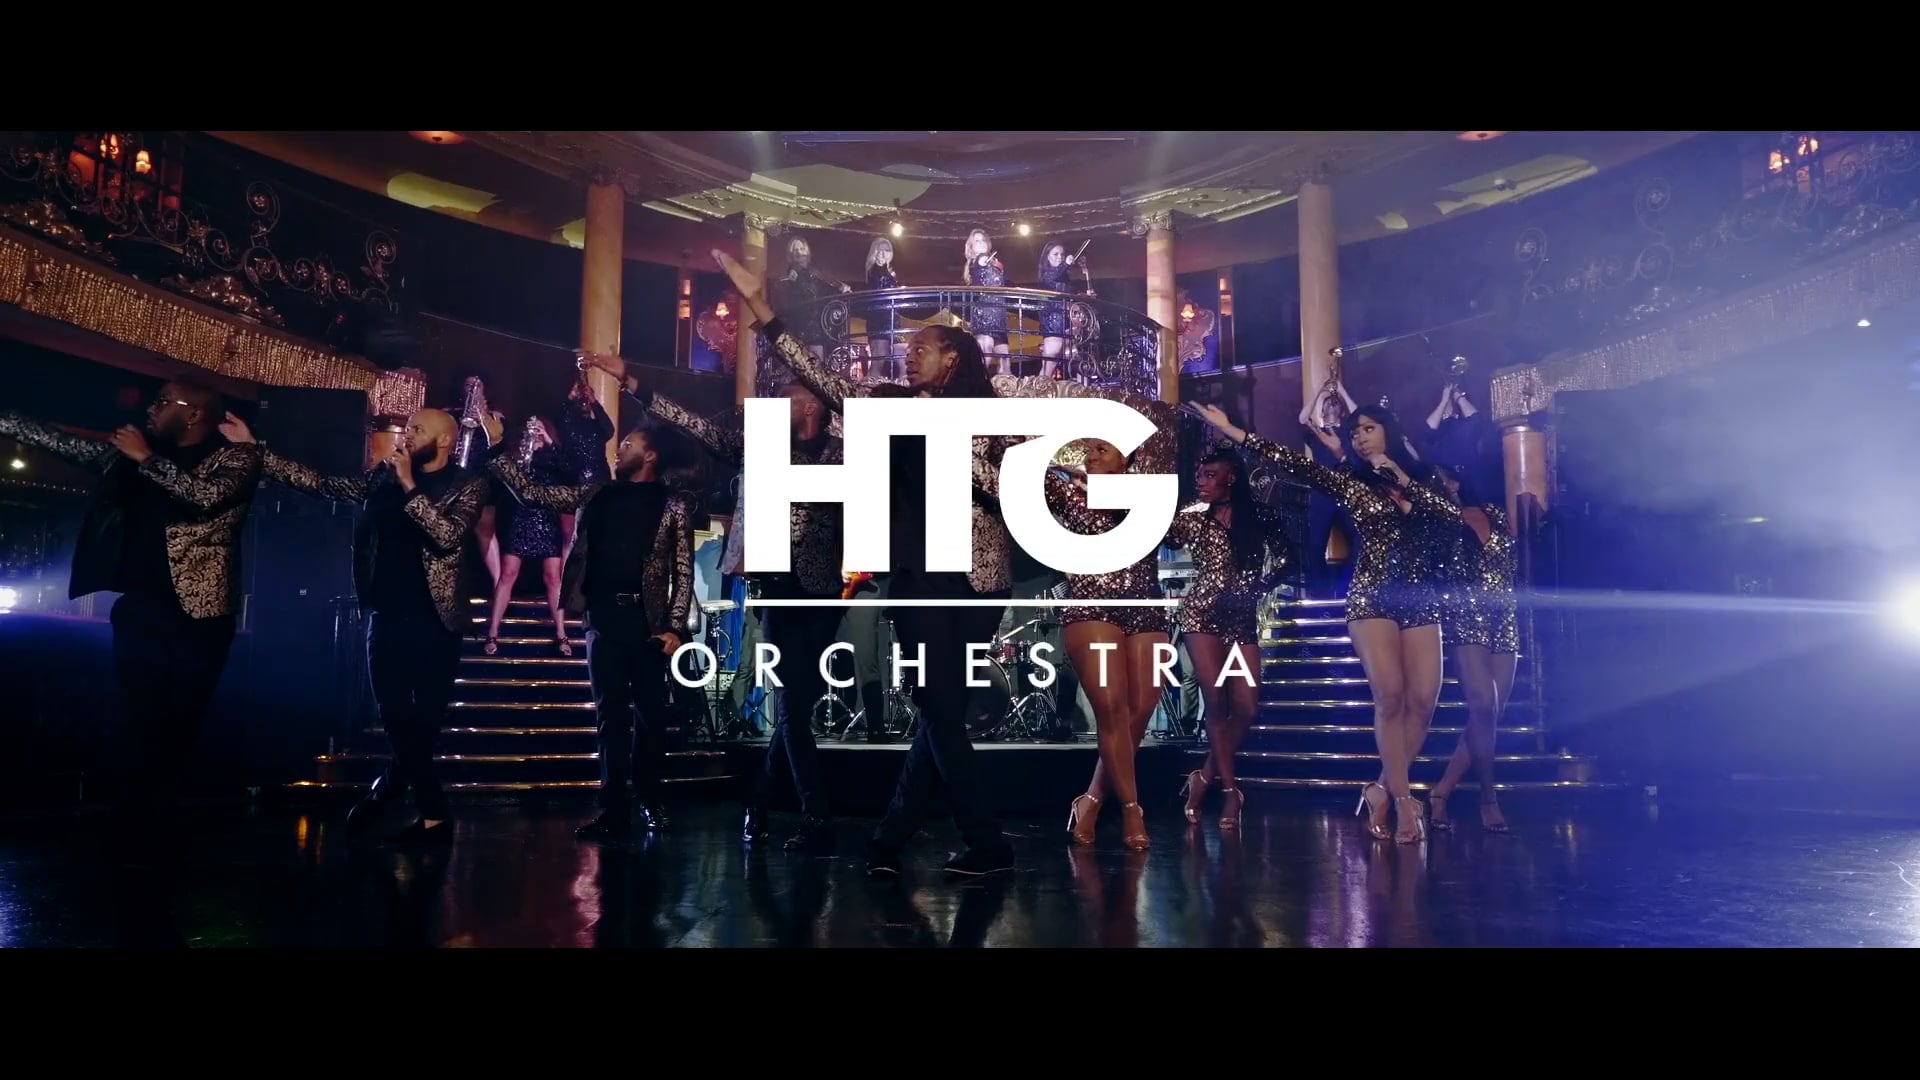 HTG Orchestra (Official Promo Video)